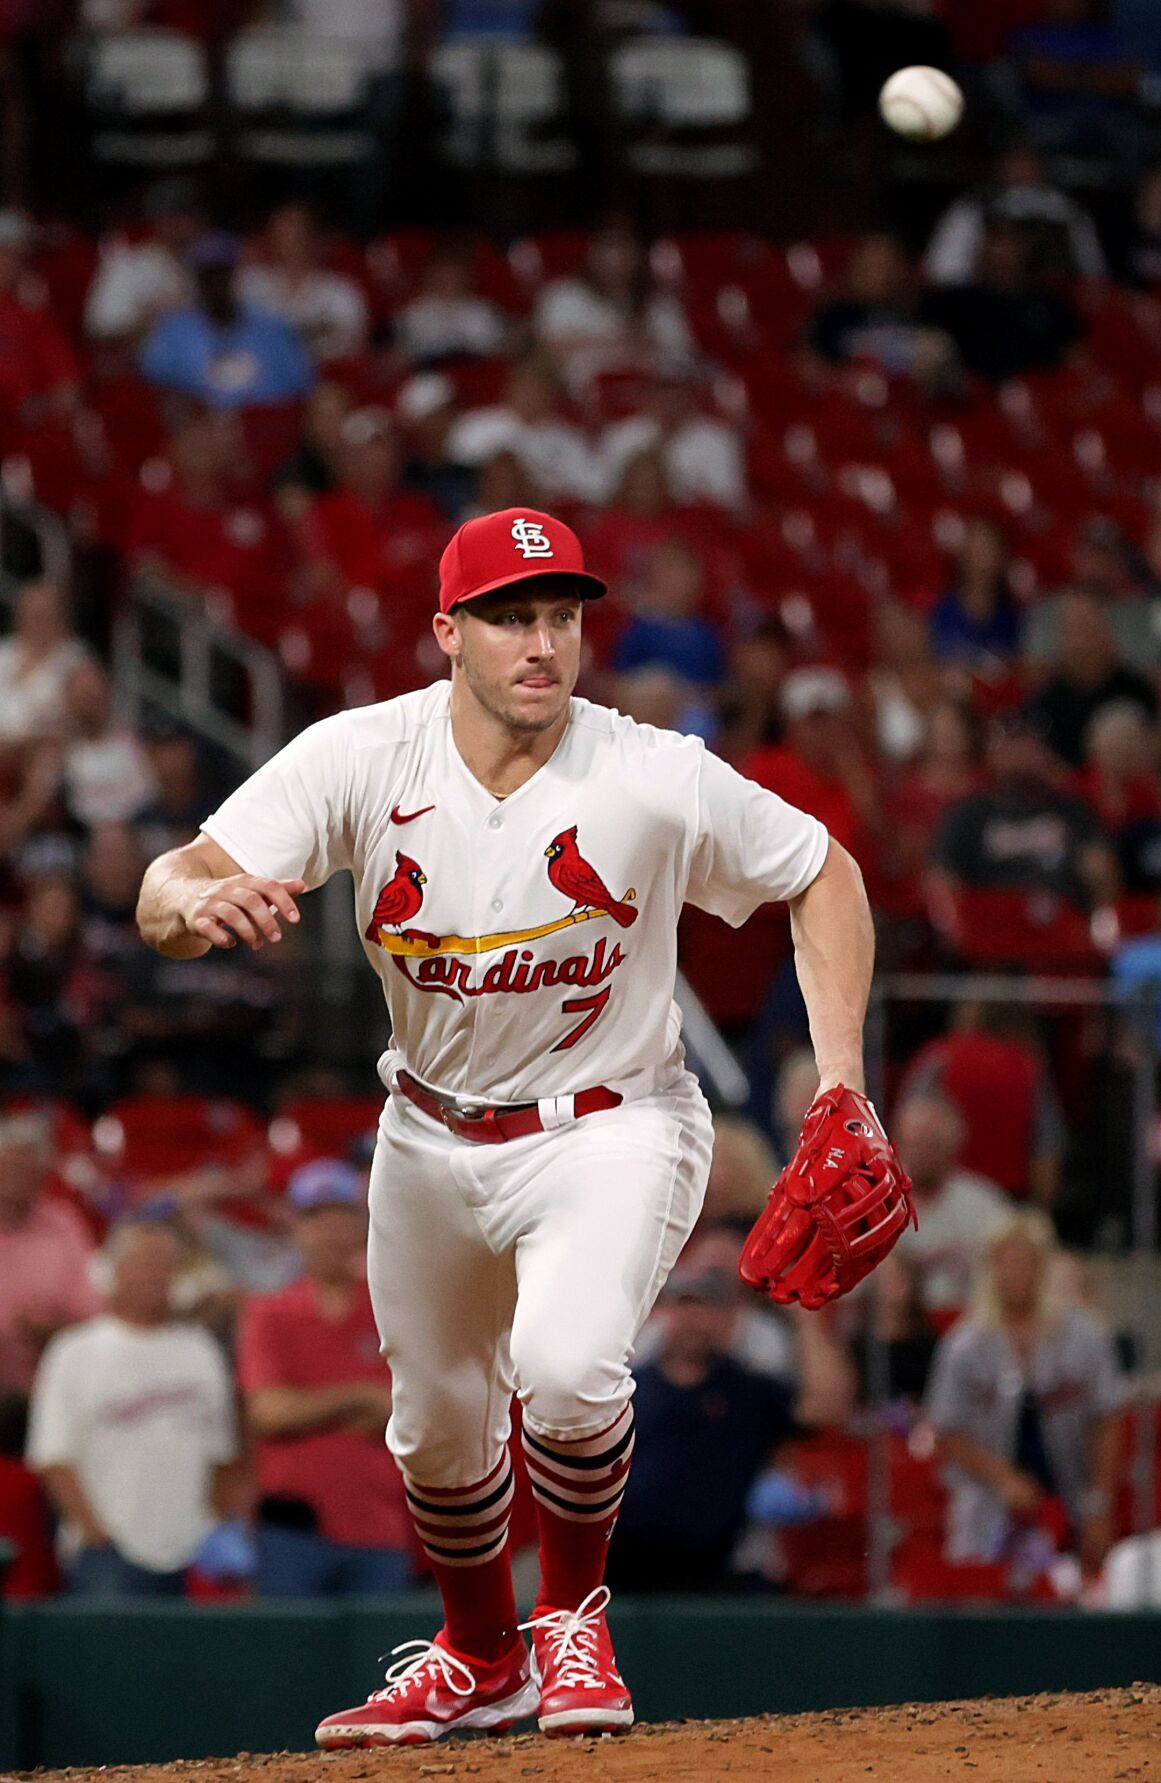 Baseball to retire Ryan Helsley's jersey number - Northeastern